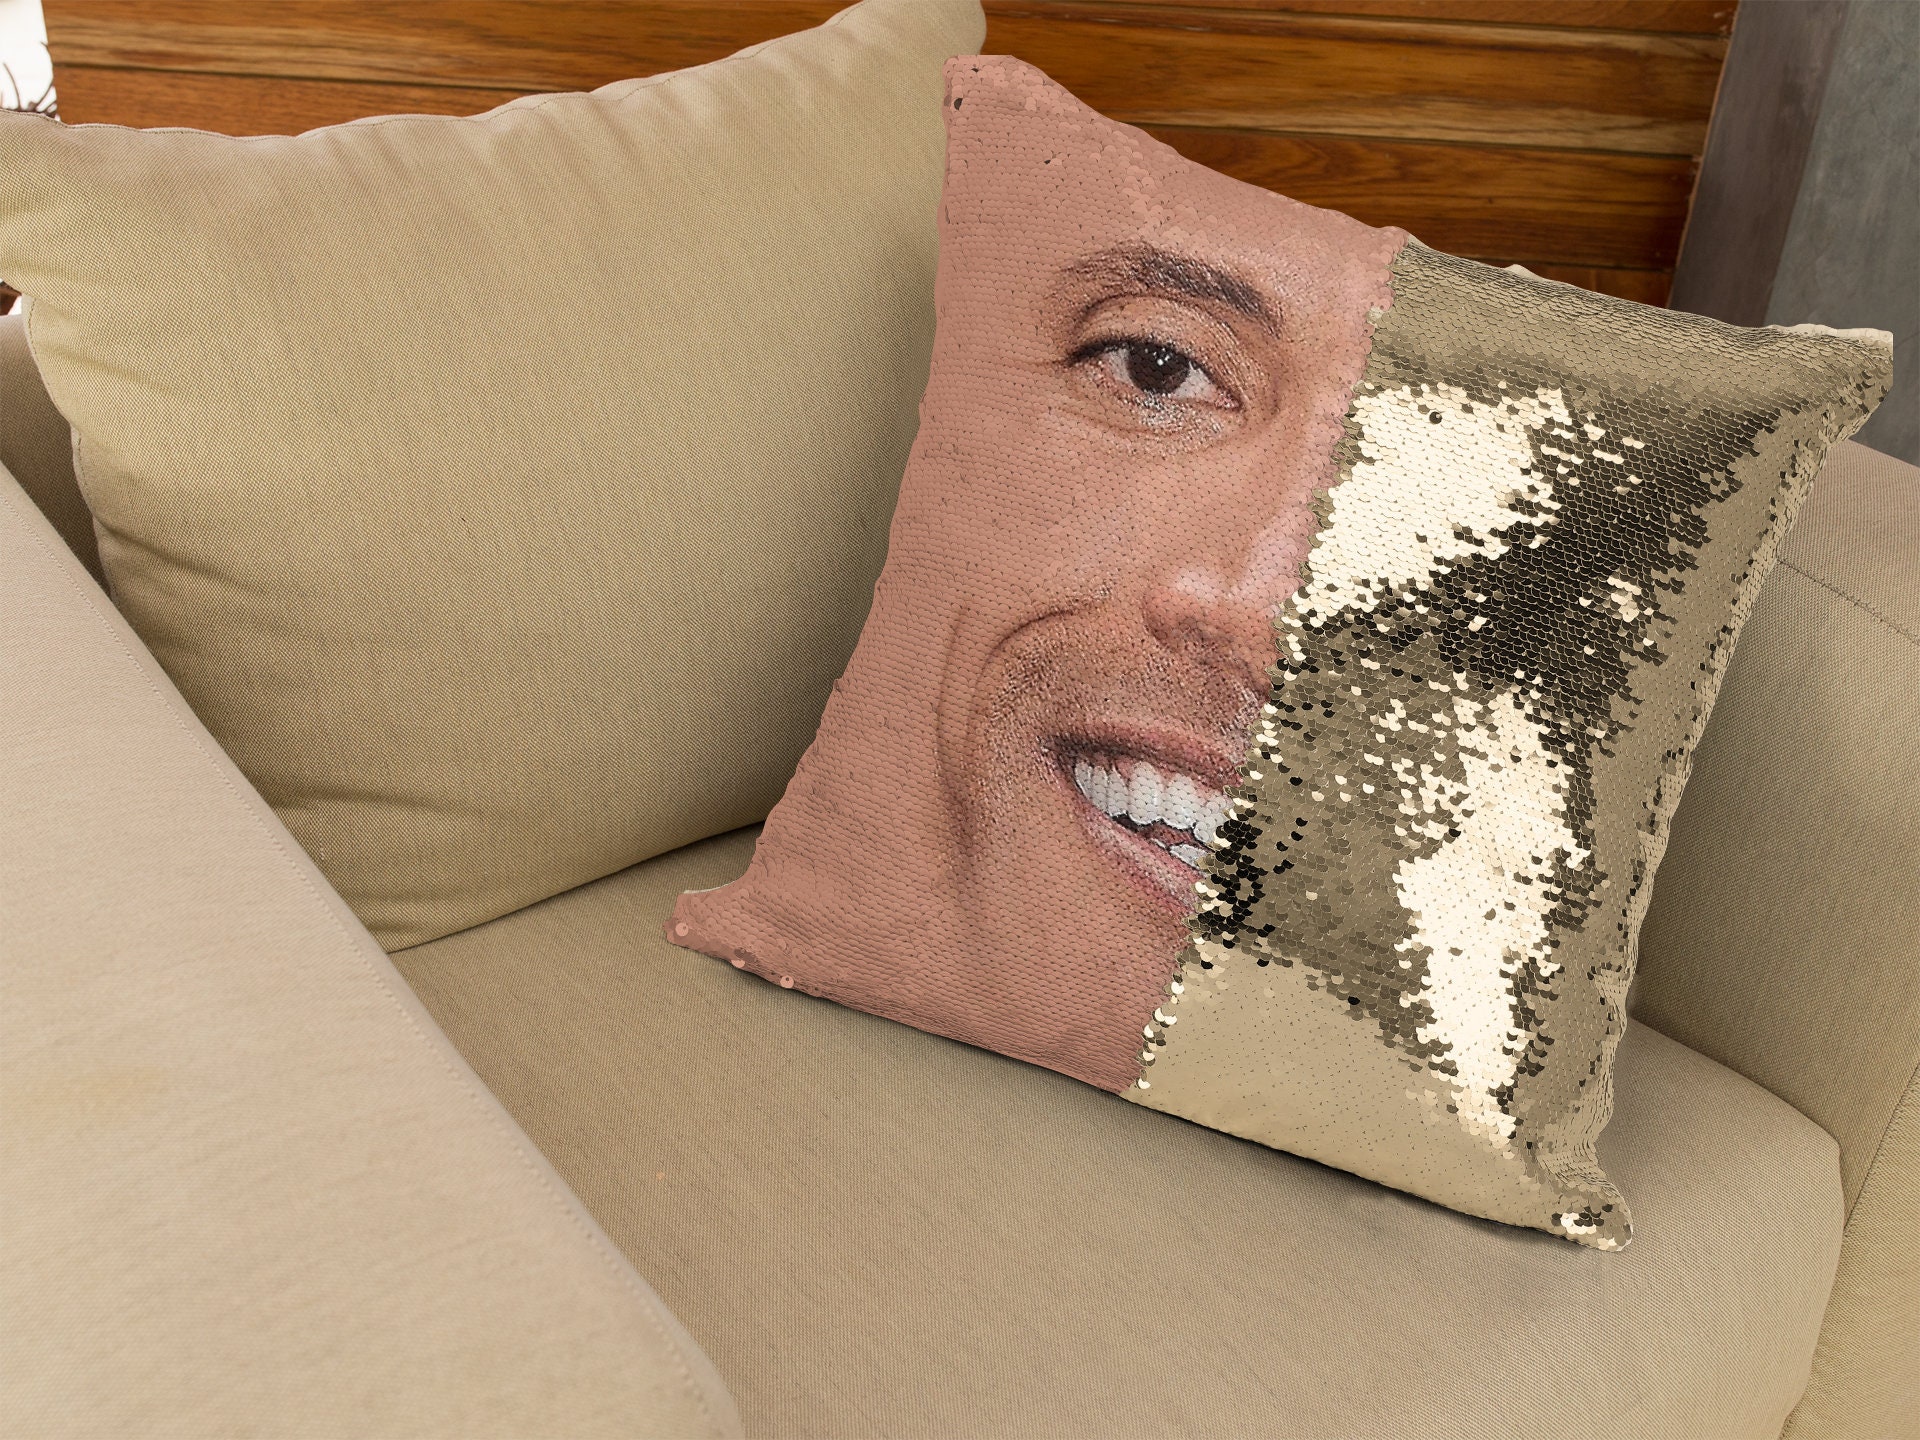 The Rock Meme Face Sequin Pillow Cover Funny the Rock Face 